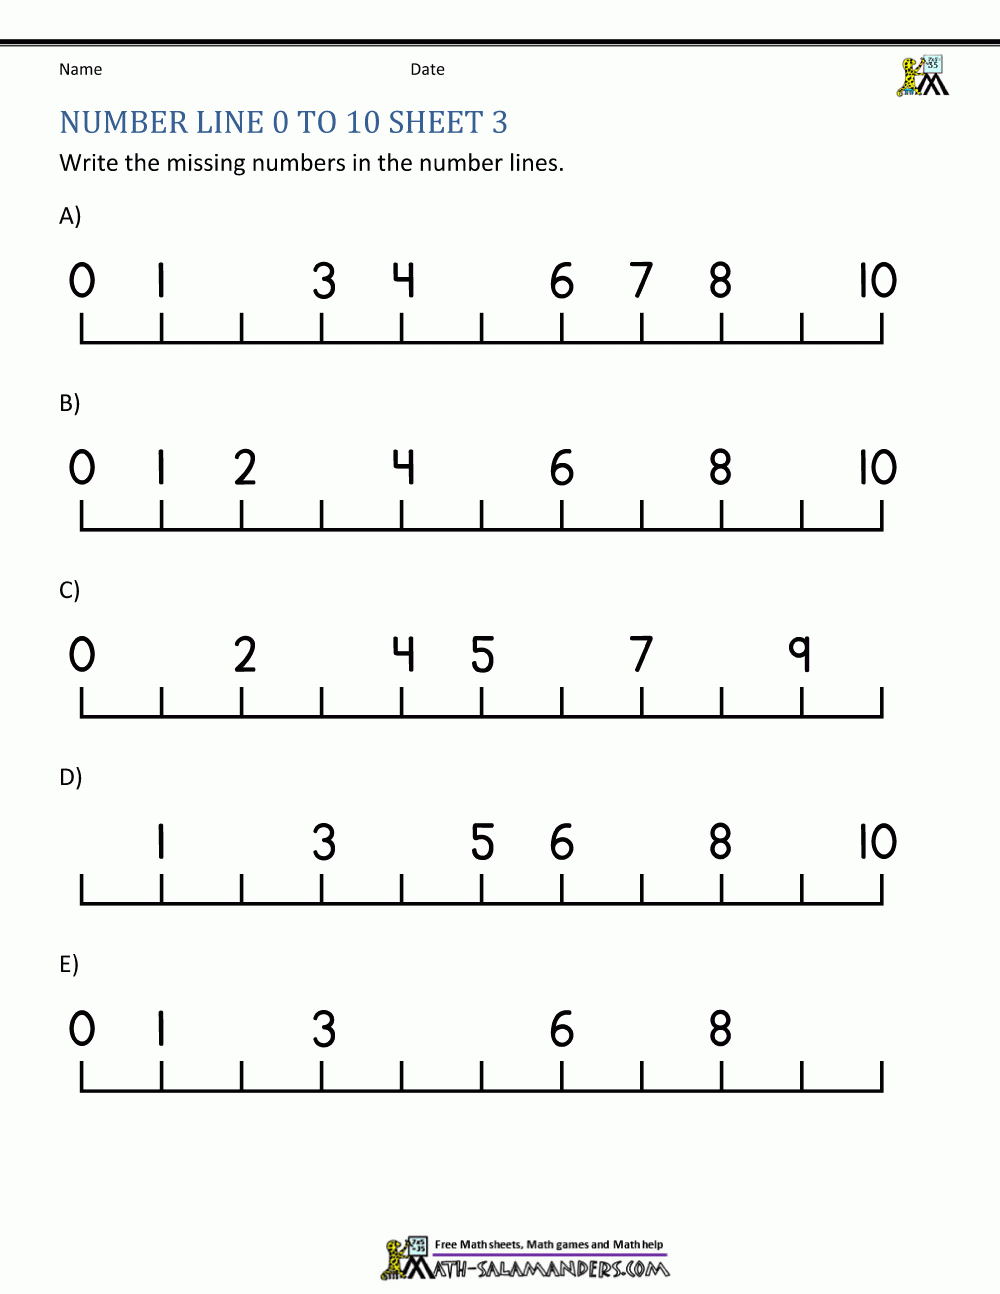 Kindergarten Number Worksheets - Free Printable Number Worksheets For Kindergarten